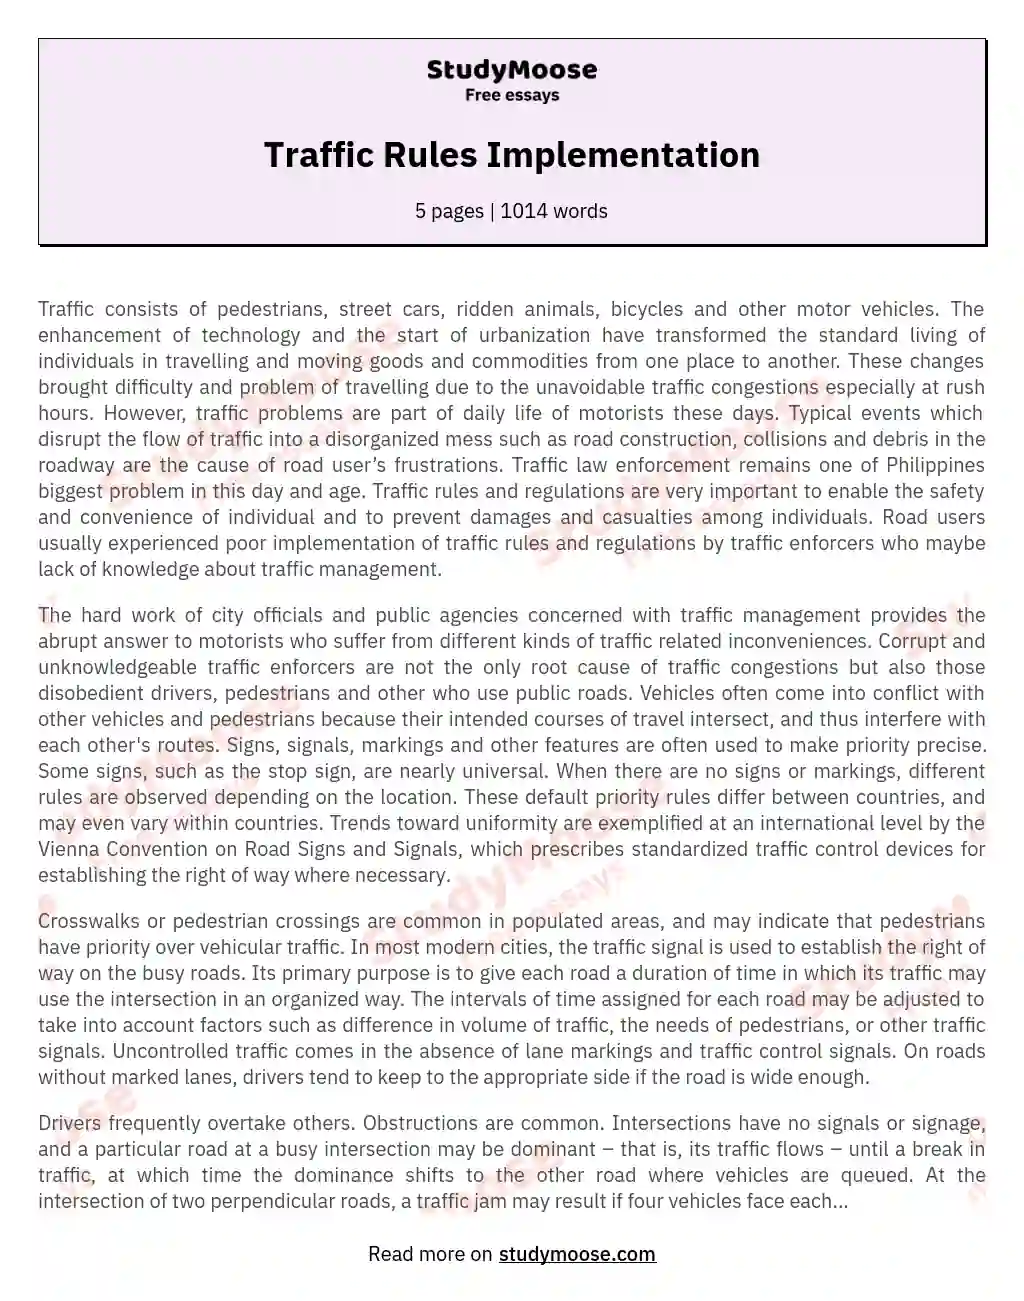 Traffic Rules Implementation essay